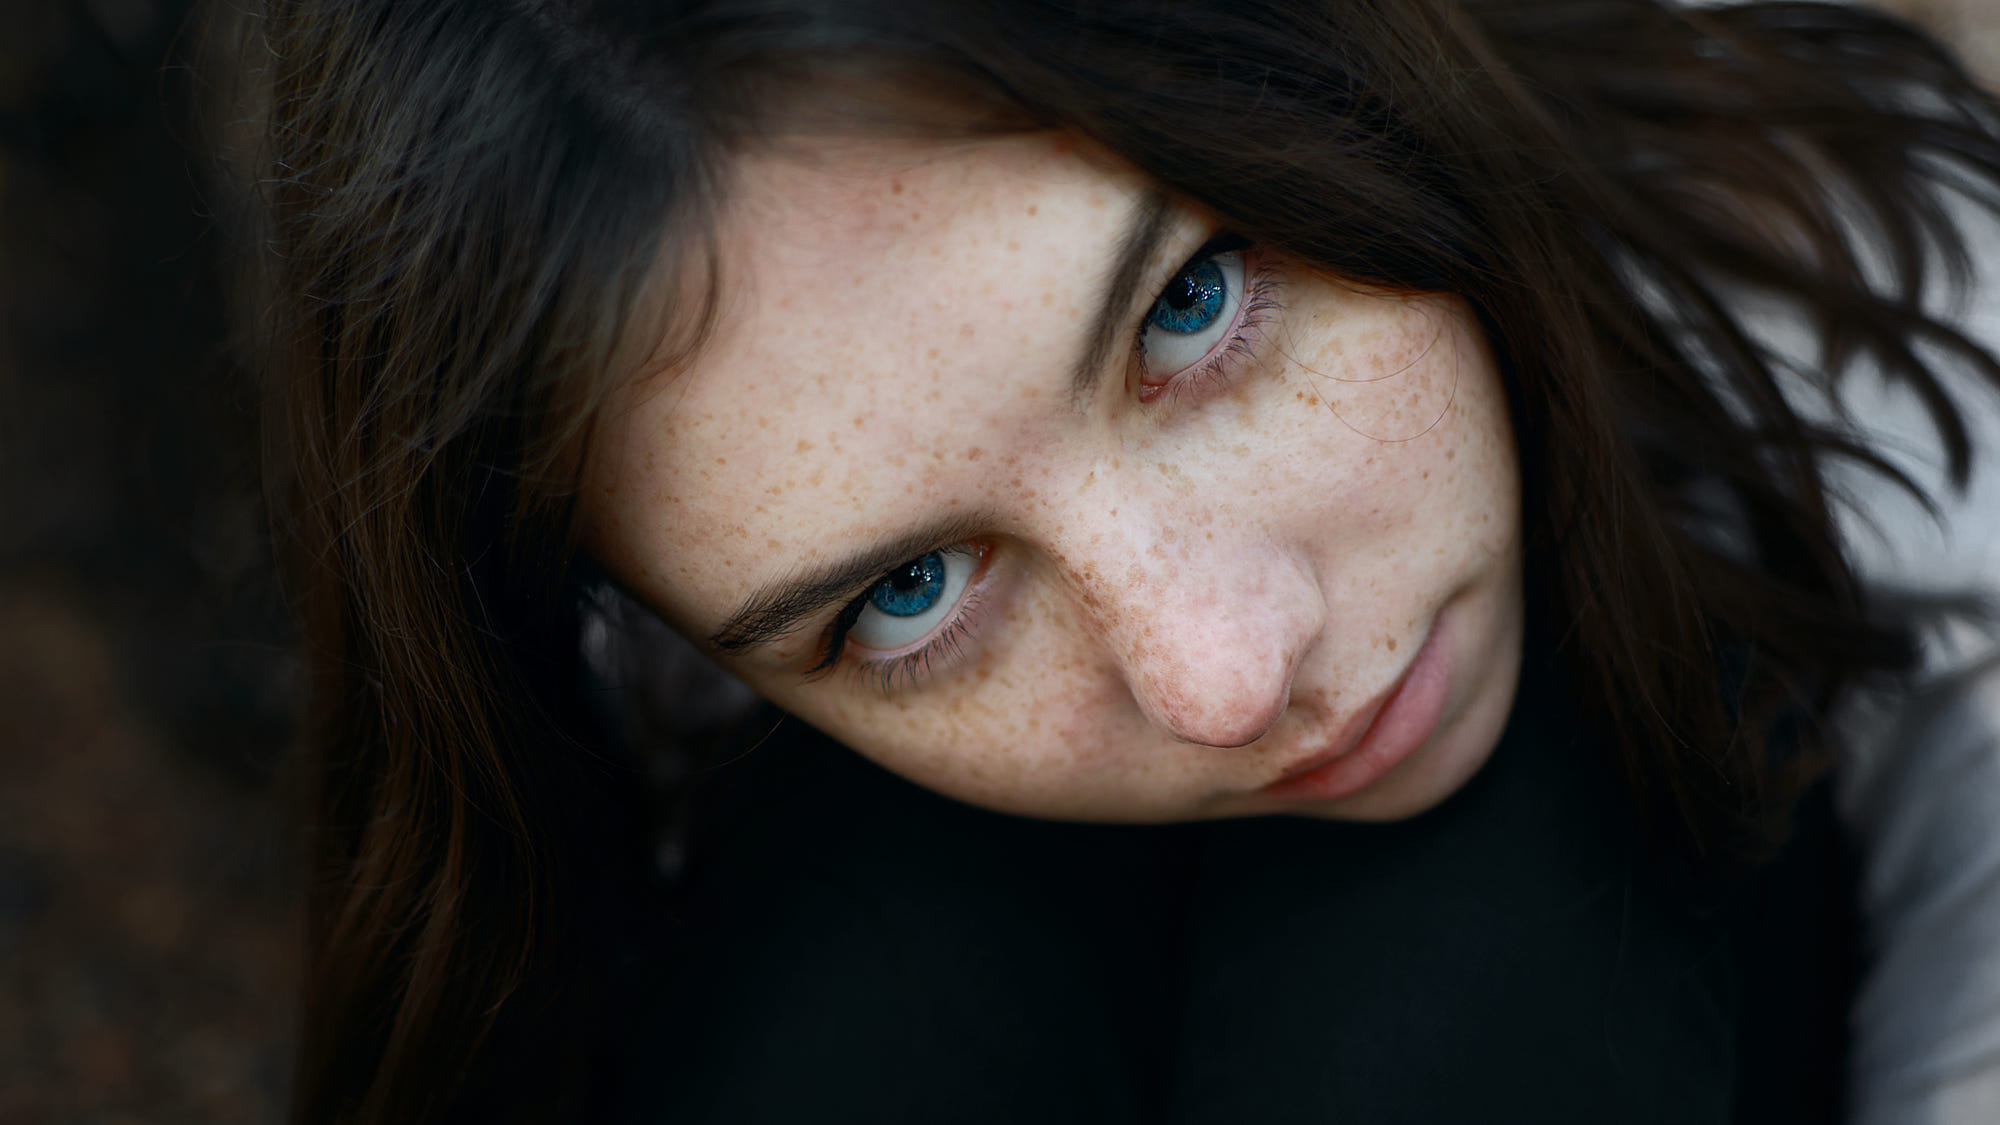 People 2000x1125 Russian women model Russian model women face blue eyes freckles closeup looking at viewer depth of field